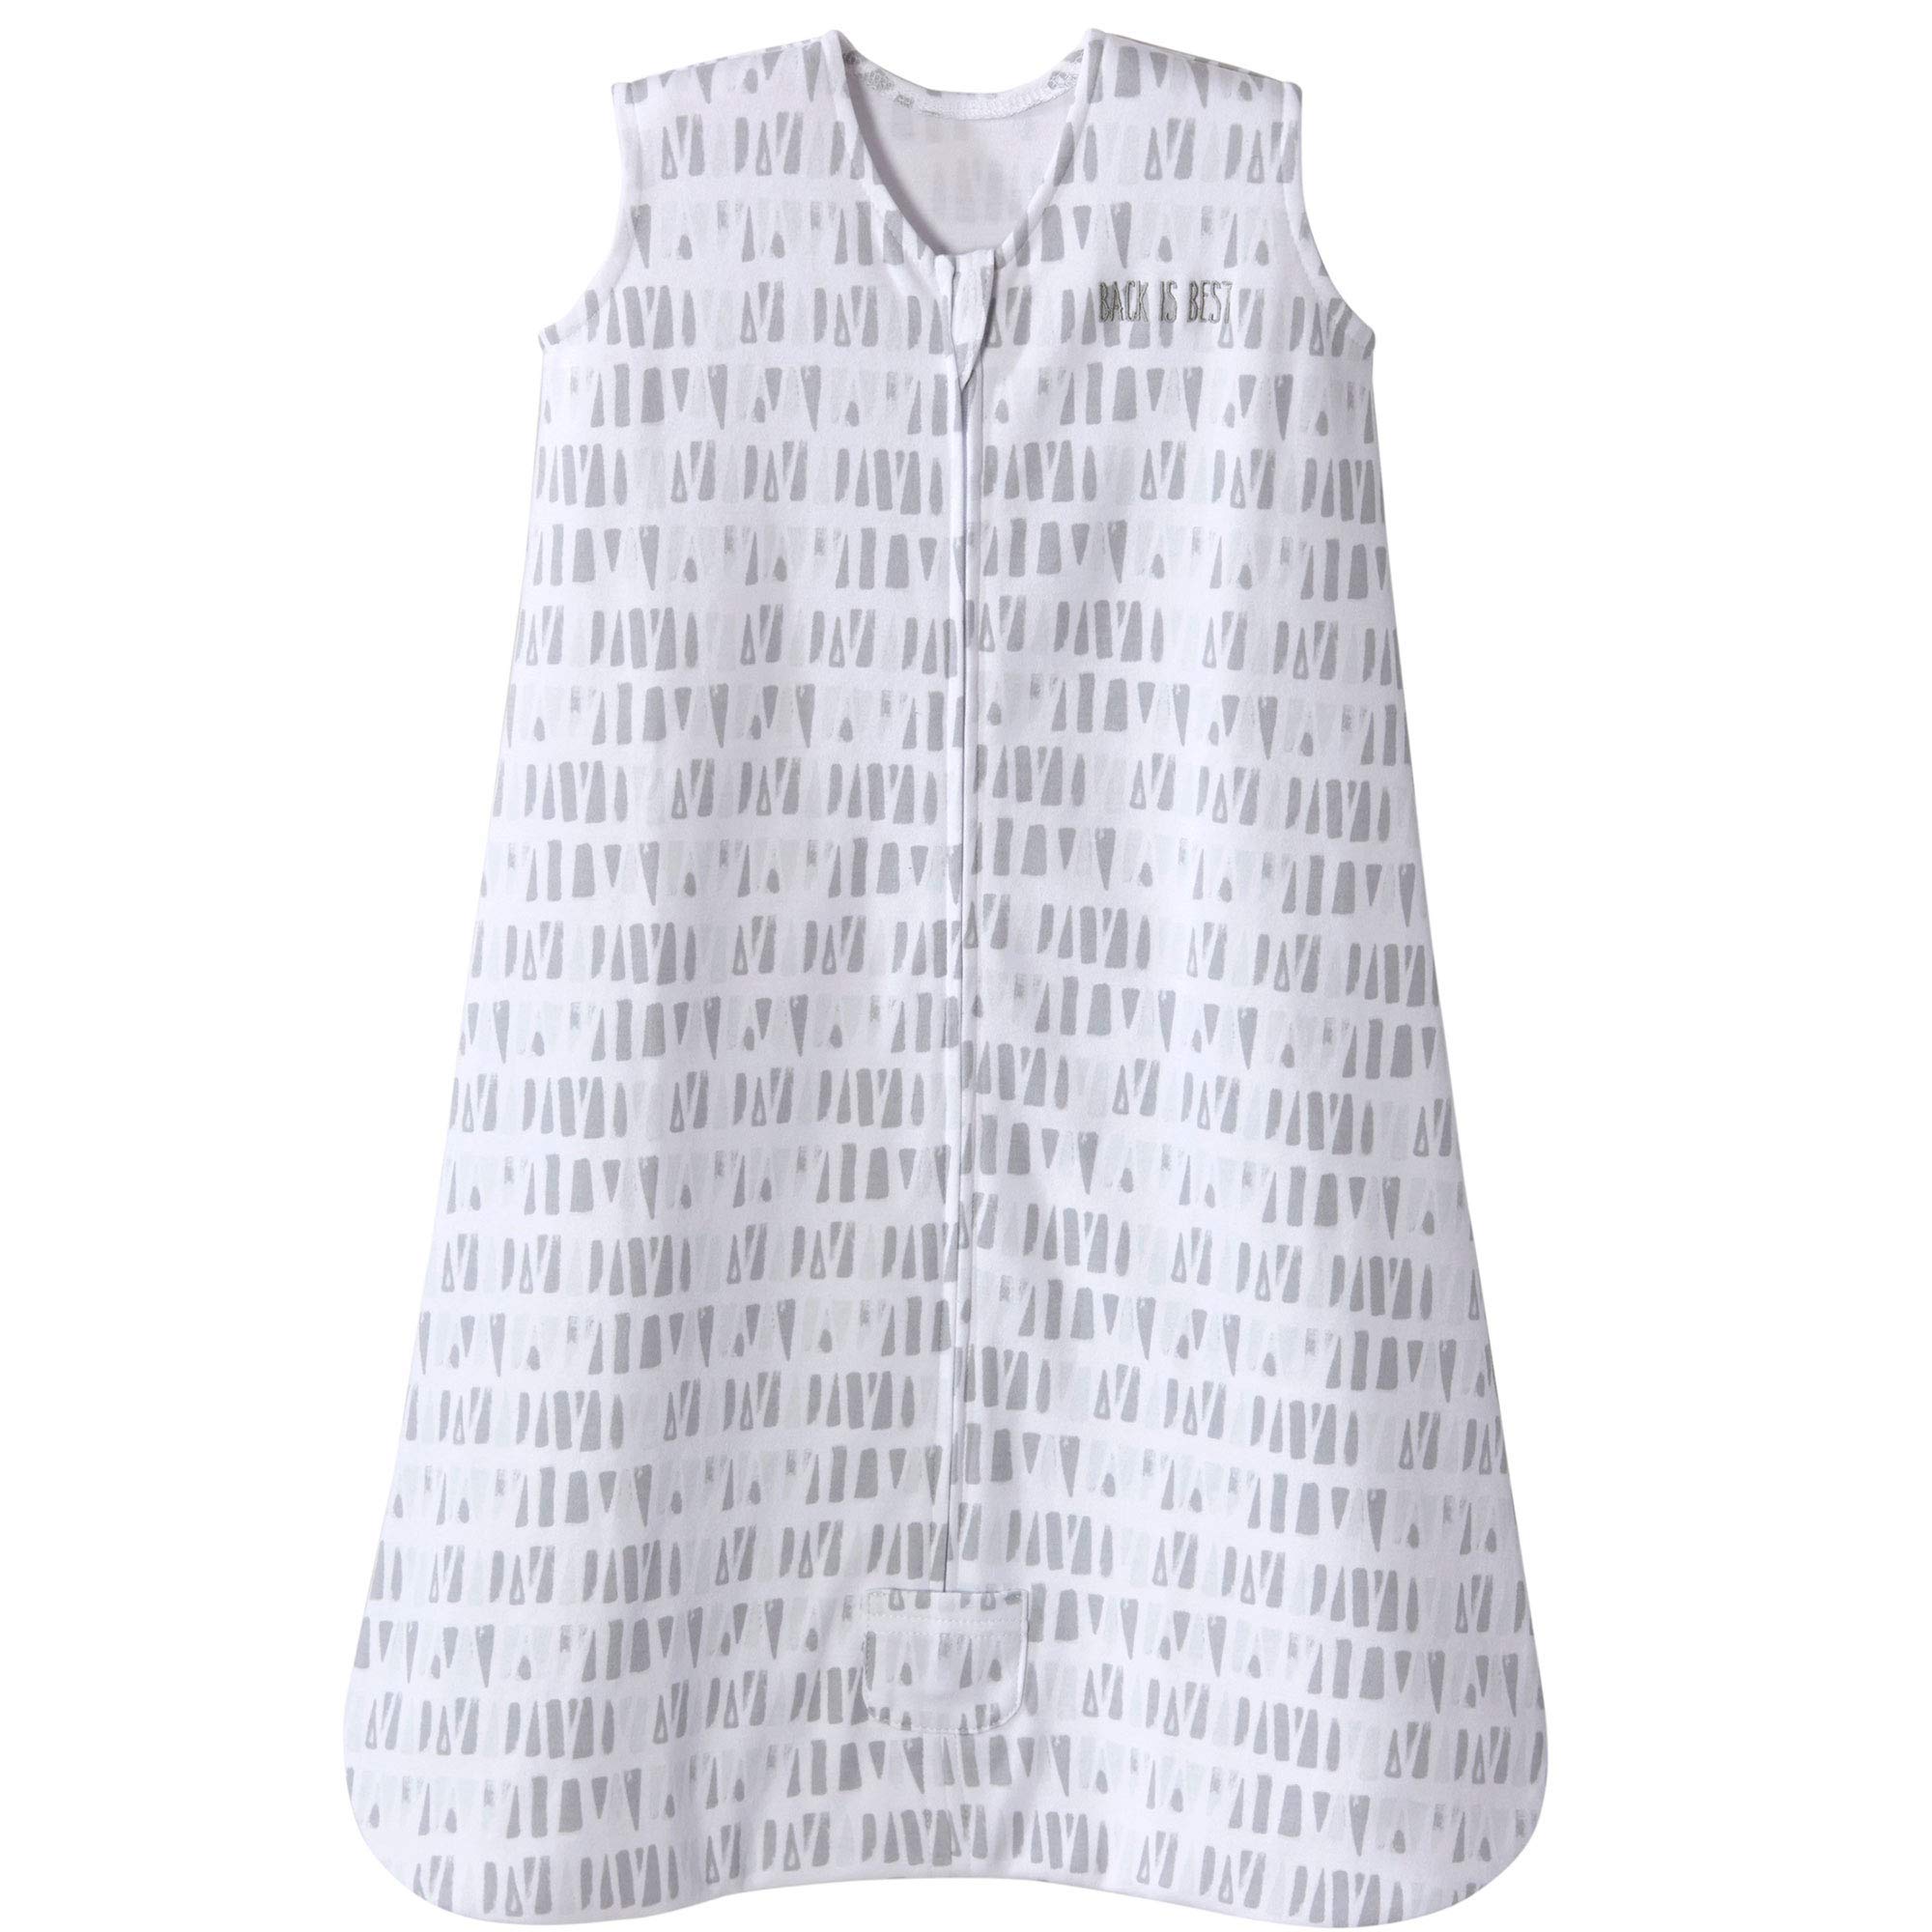 HALO 100% Cotton Baby Sleepsack Wearable Blanket Bundle Set of 3, Neutral, X-Large